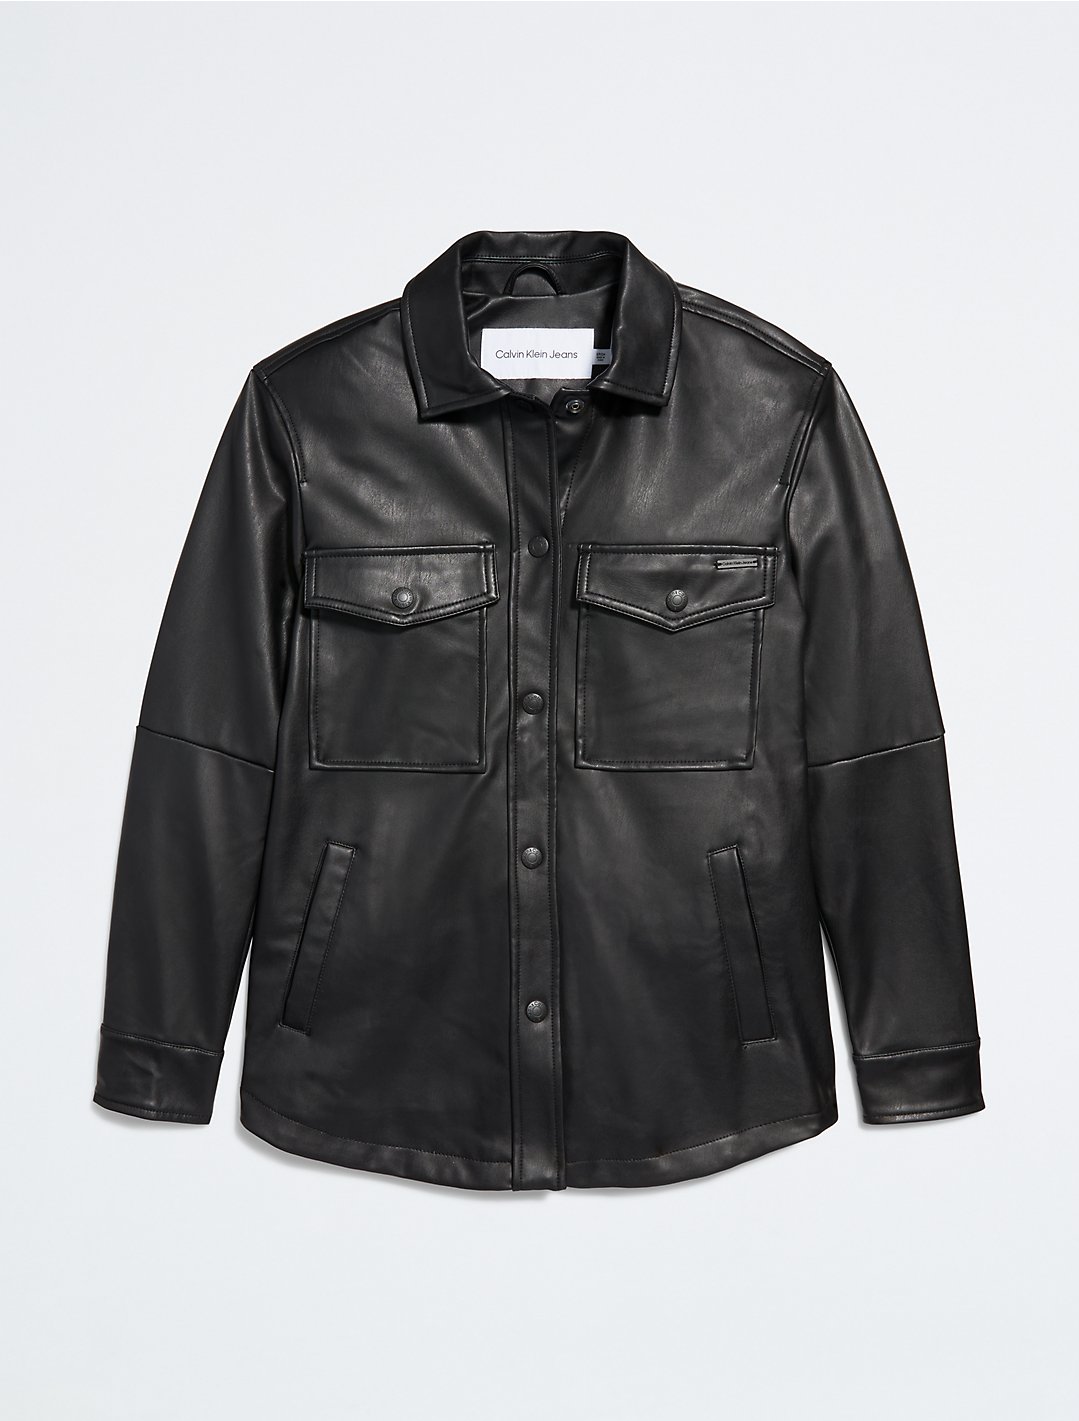 Arriba 74+ imagen calvin klein faux leather shirt jacket